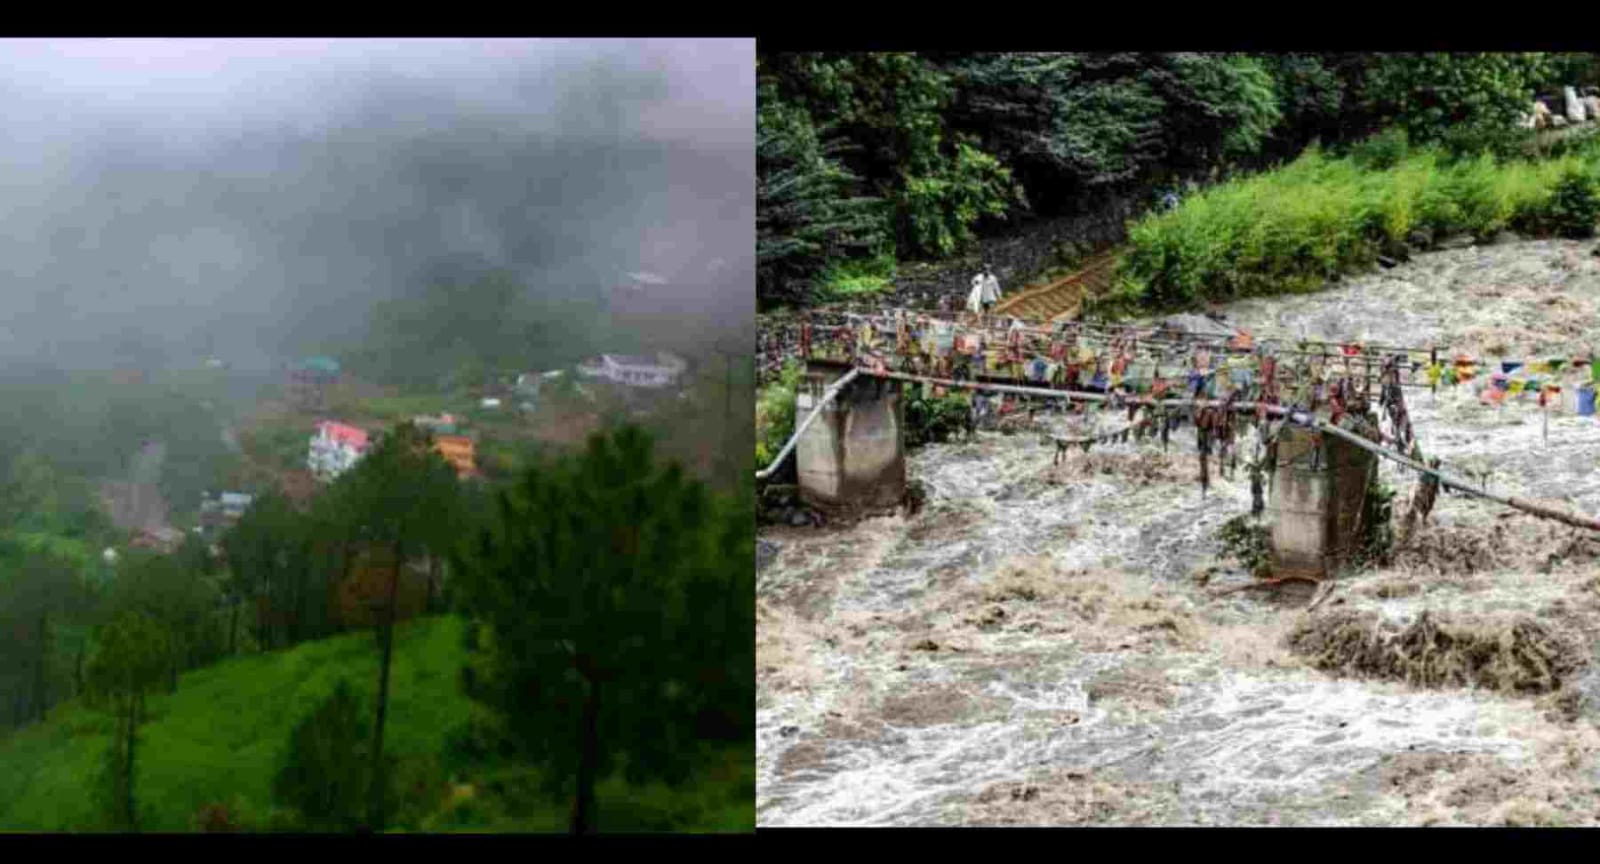 Uttarakhand weather news: Heavy rain alert in 6 districts, Avoid traveling in mountains. Uttarakhand Rain News devbhoomidarshan17.com